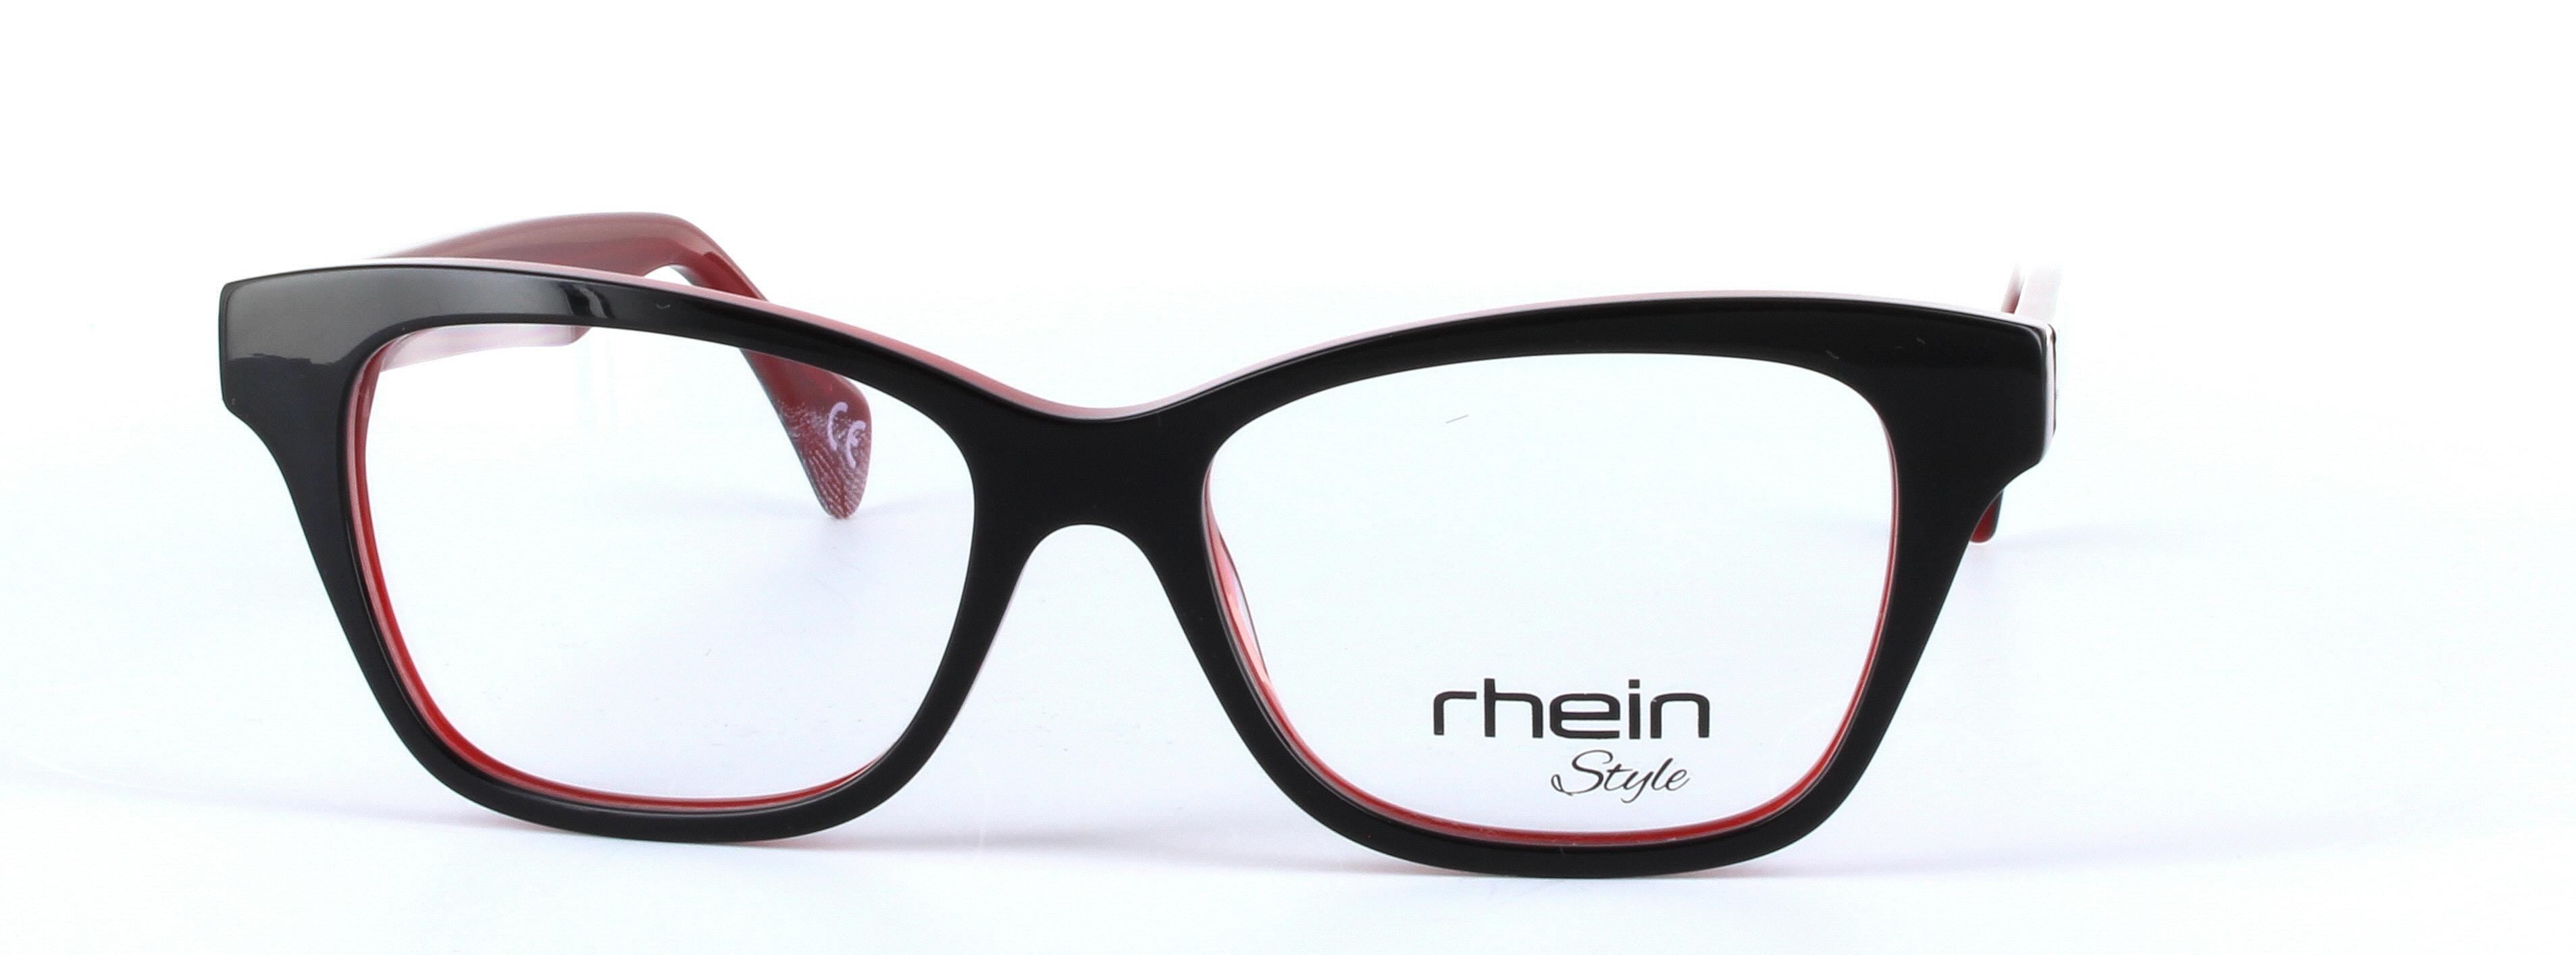 Felia Black Full Rim Oval Round Plastic Glasses - Image View 5